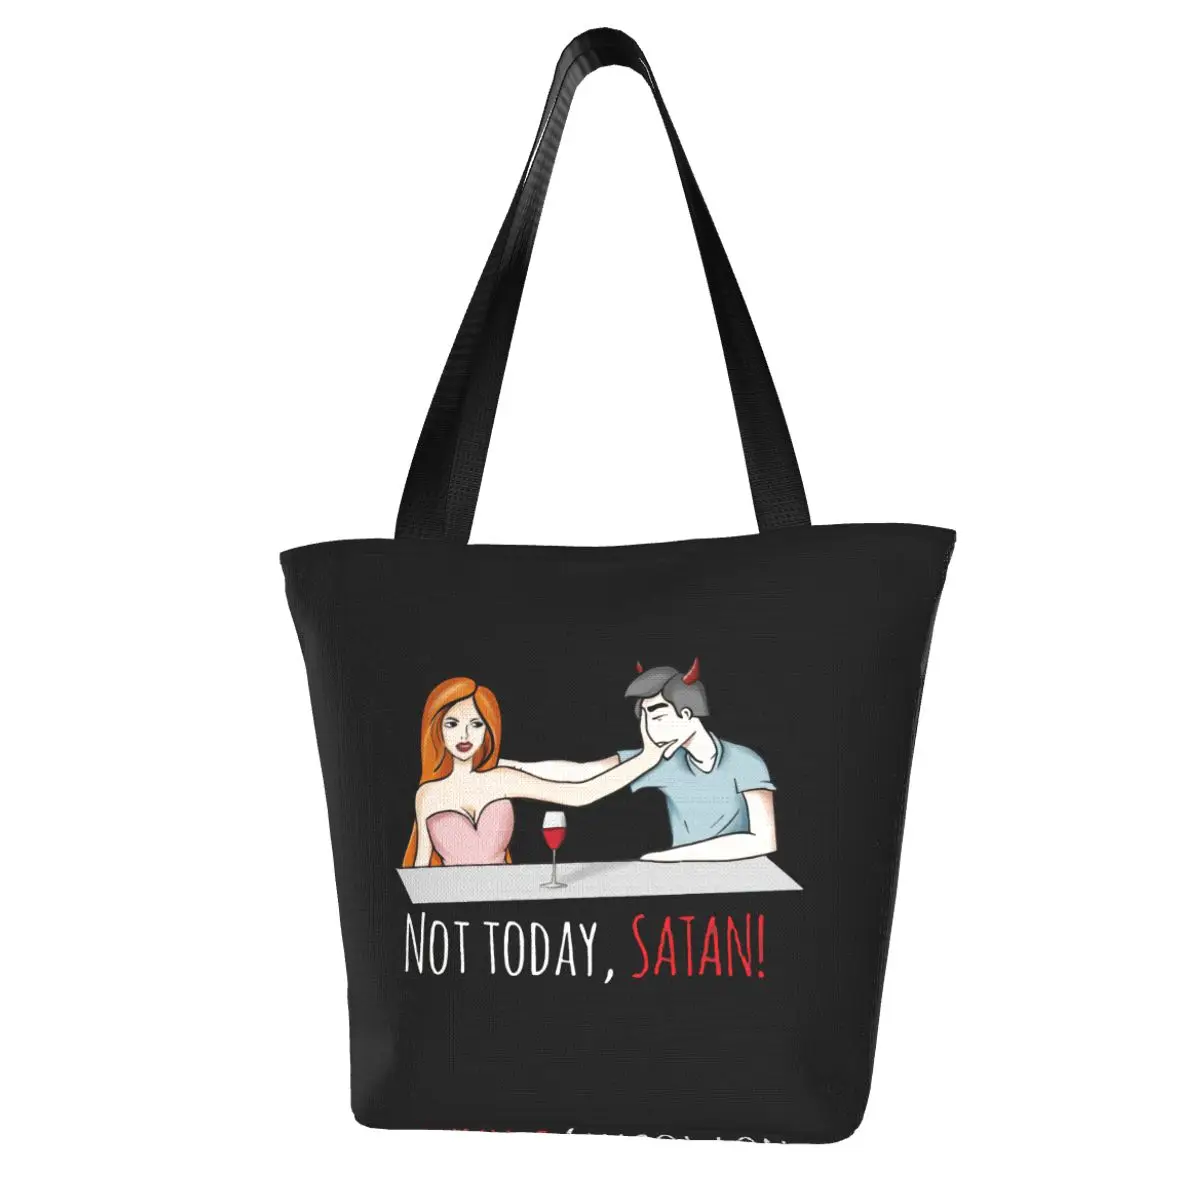 Not Today Satan! Today Not Satan! Vino Wine Shopping Bag Aesthetic Cloth Outdoor Handbag Female Fashion Bags